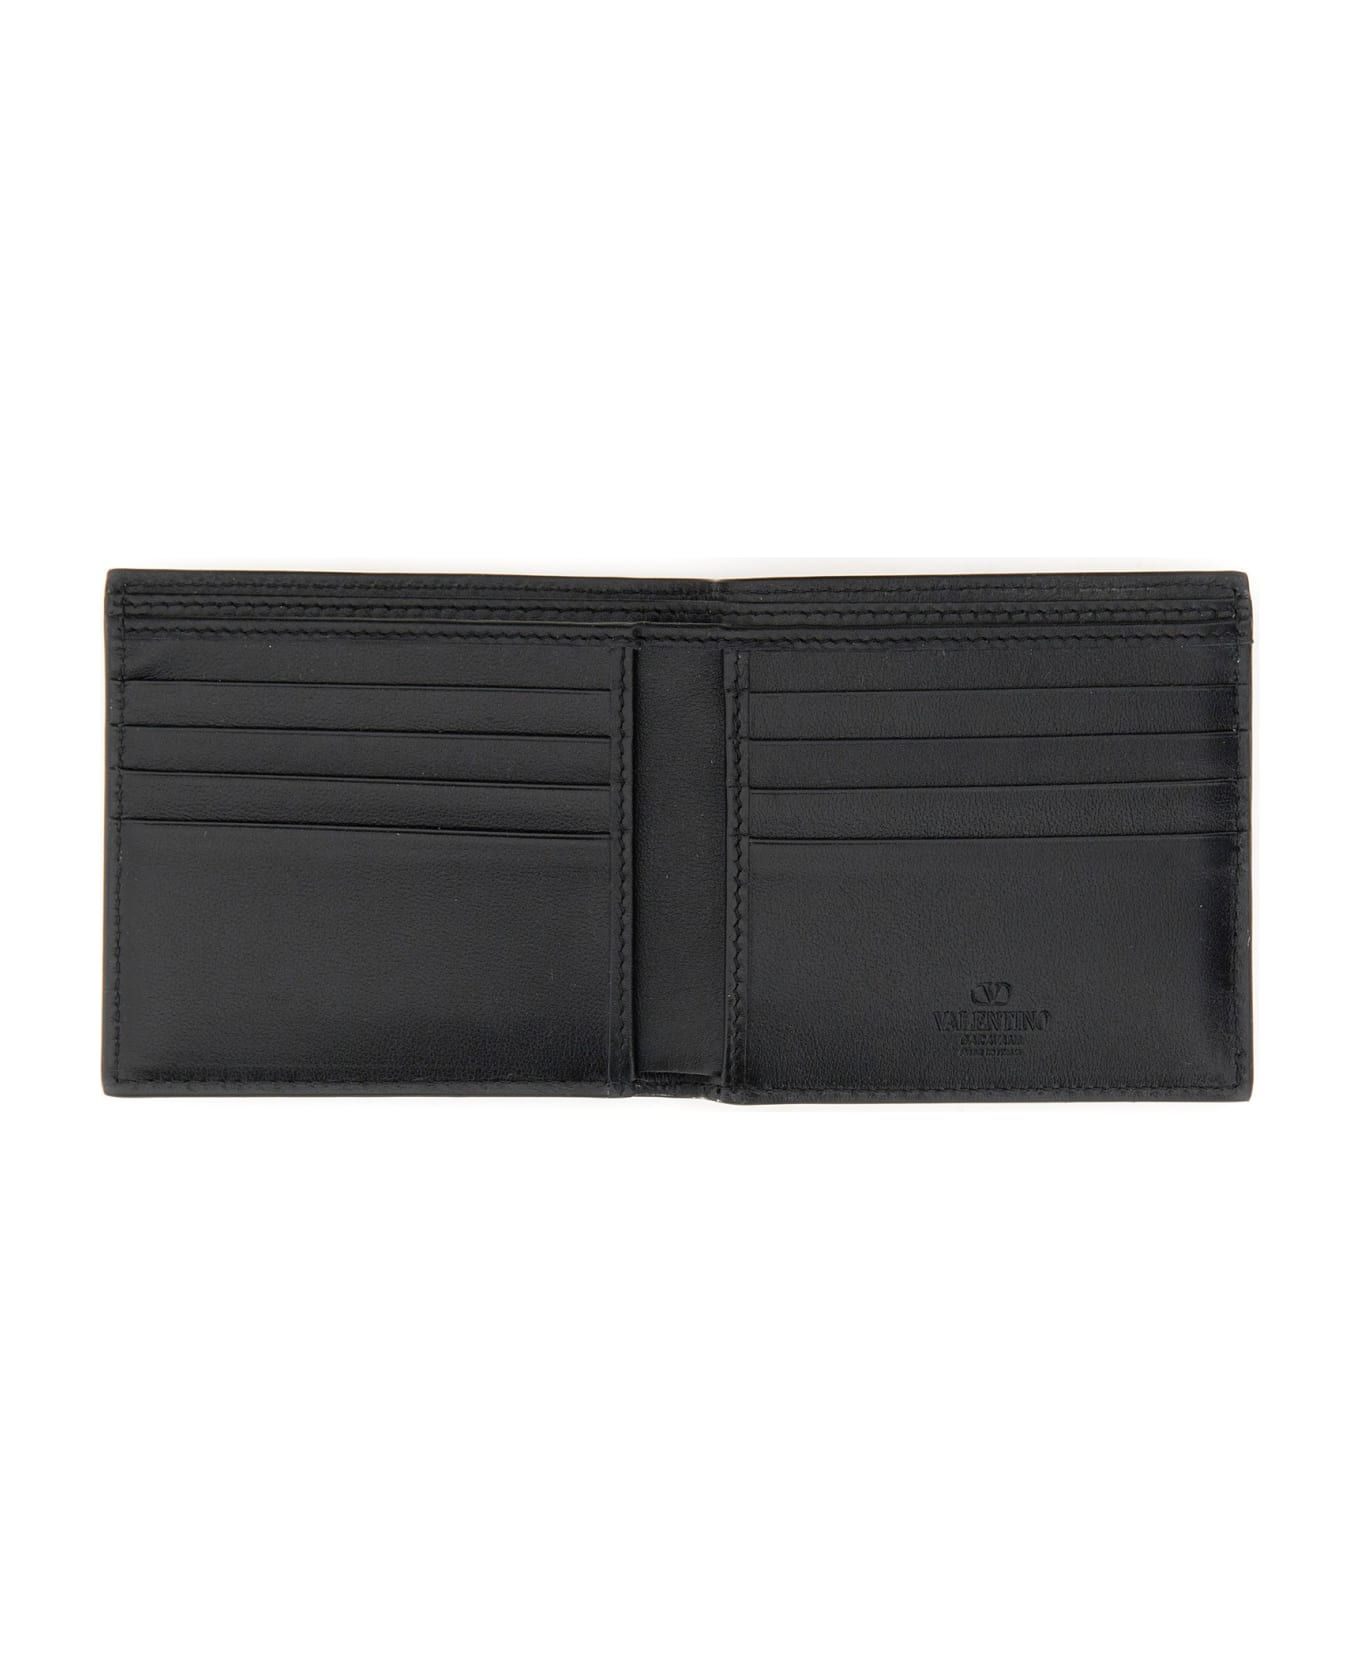 Valentino Garavani Rockstud Calfskin Wallet - Black 財布